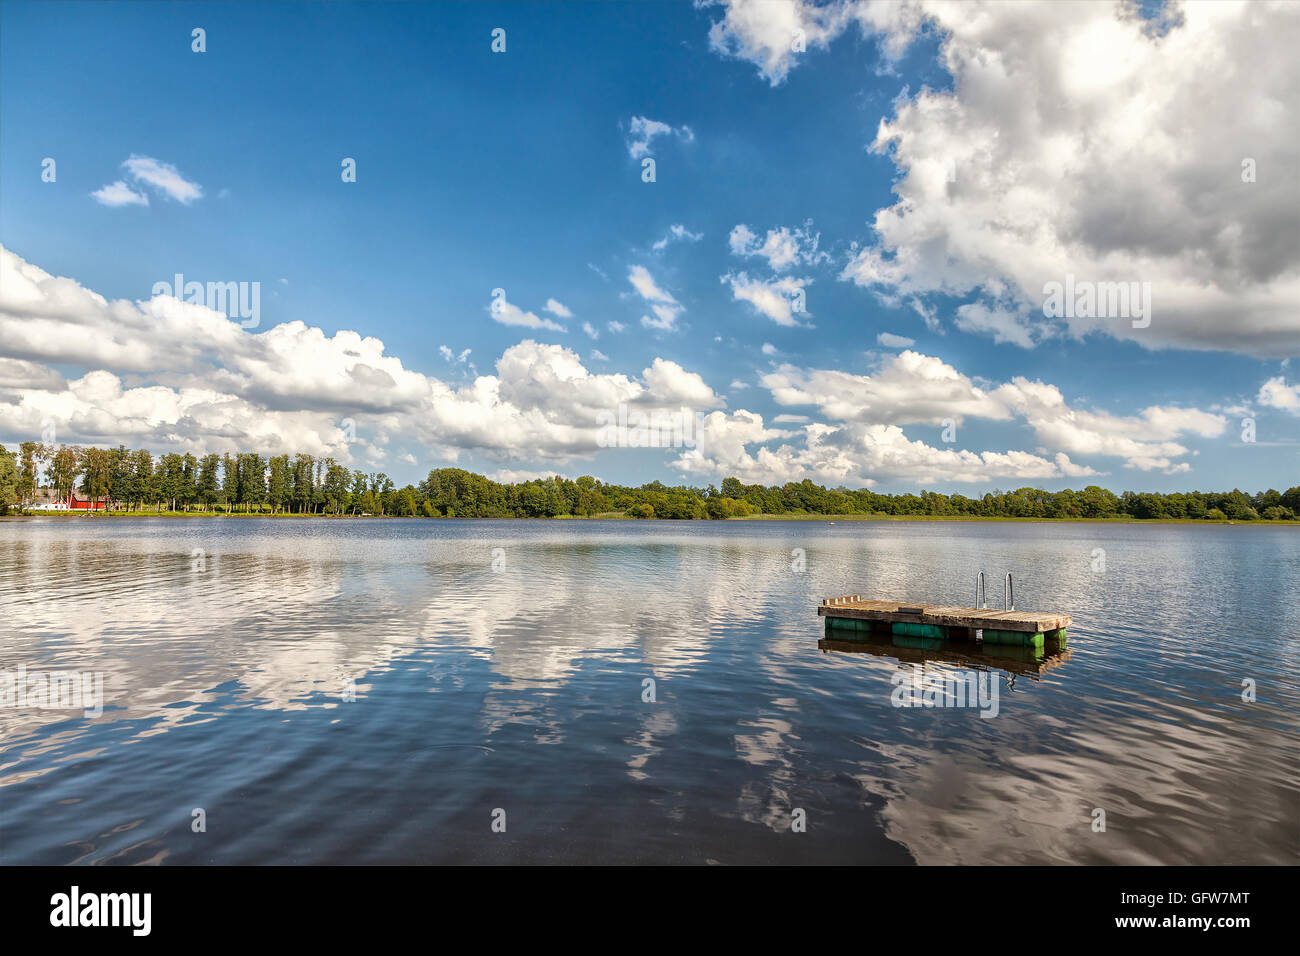 Immagine di un pontile galleggiante plattform nel lago Ivosjon, Svezia. Foto Stock